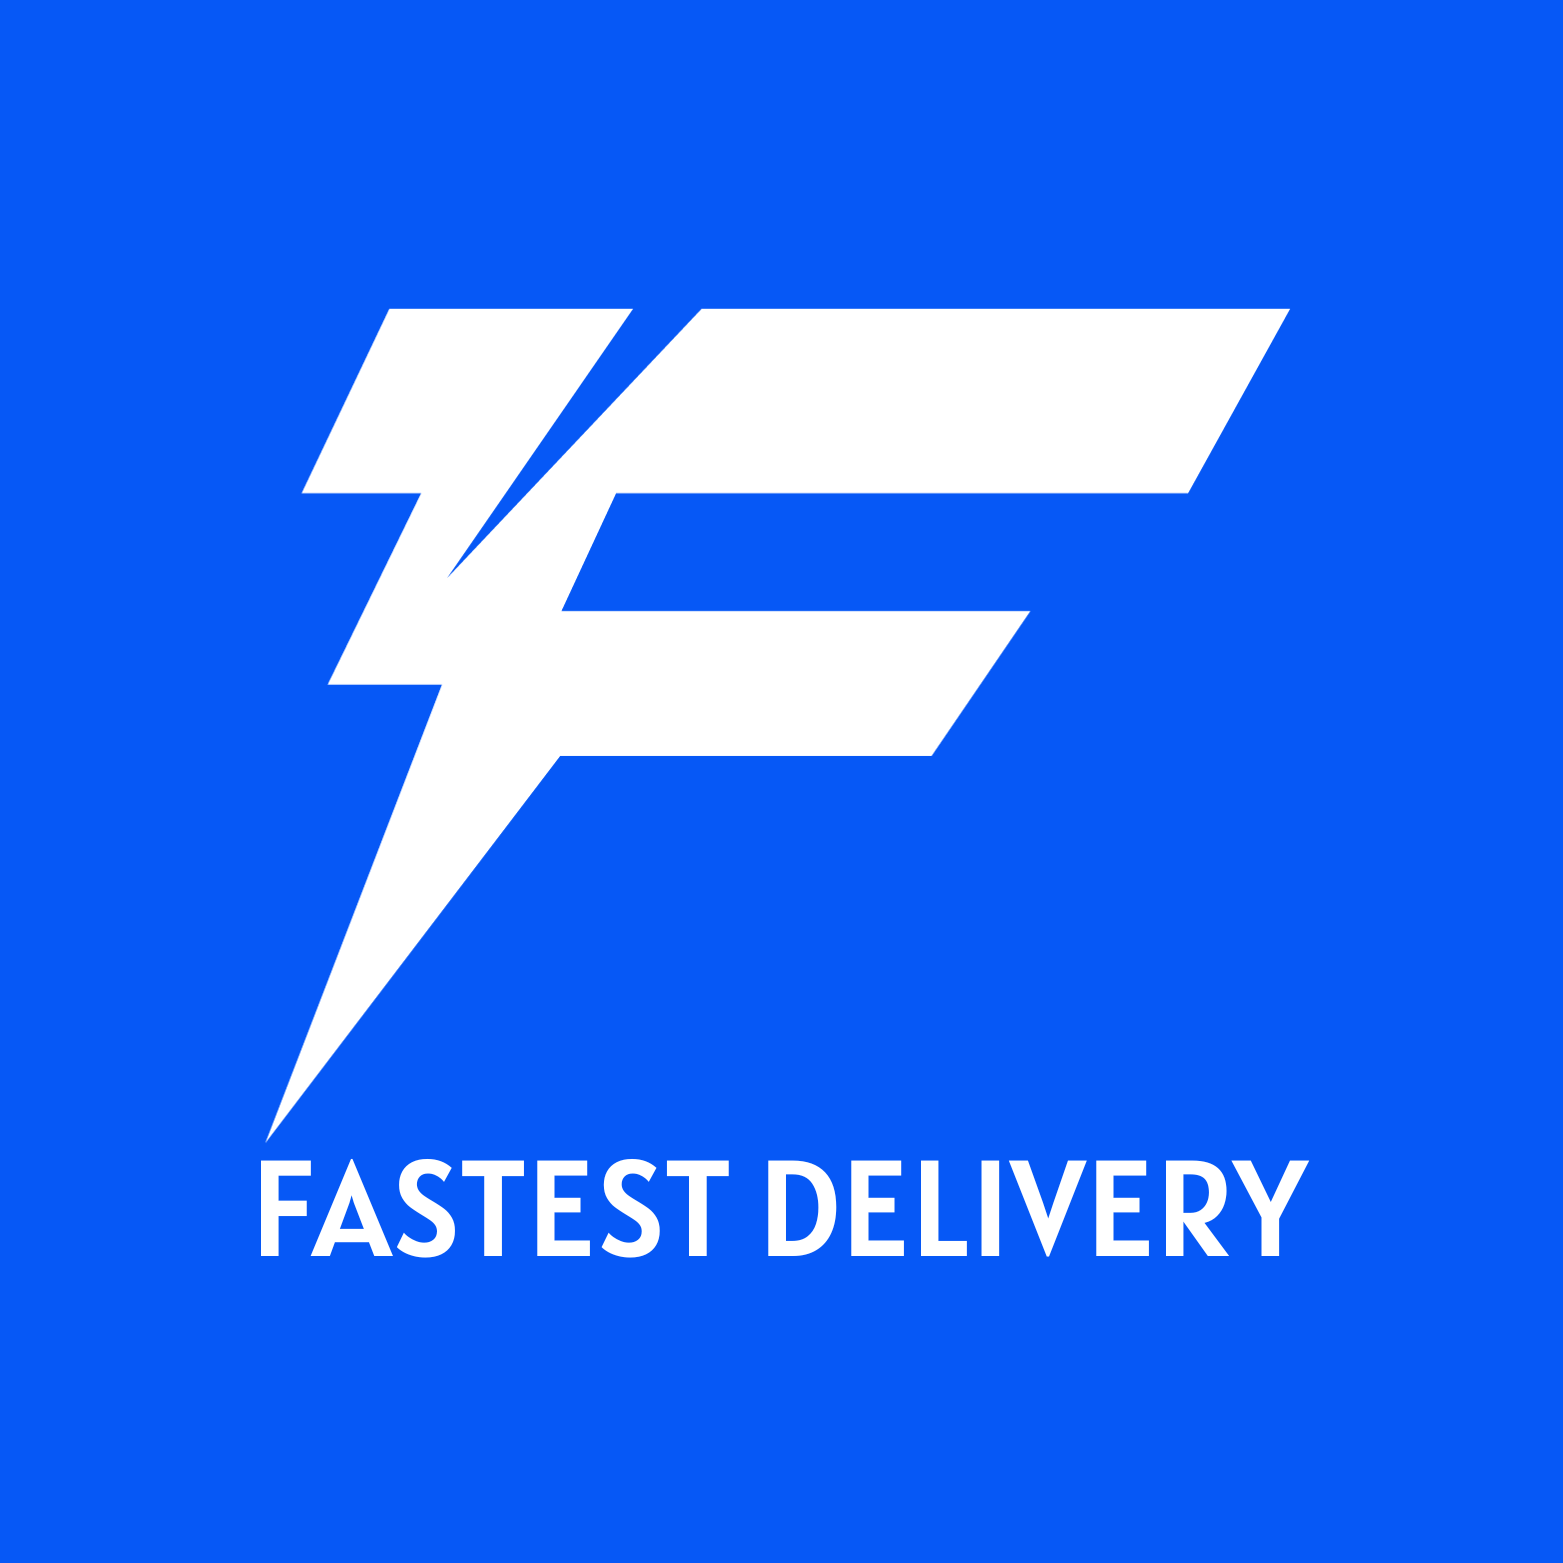 Fastestdelivery